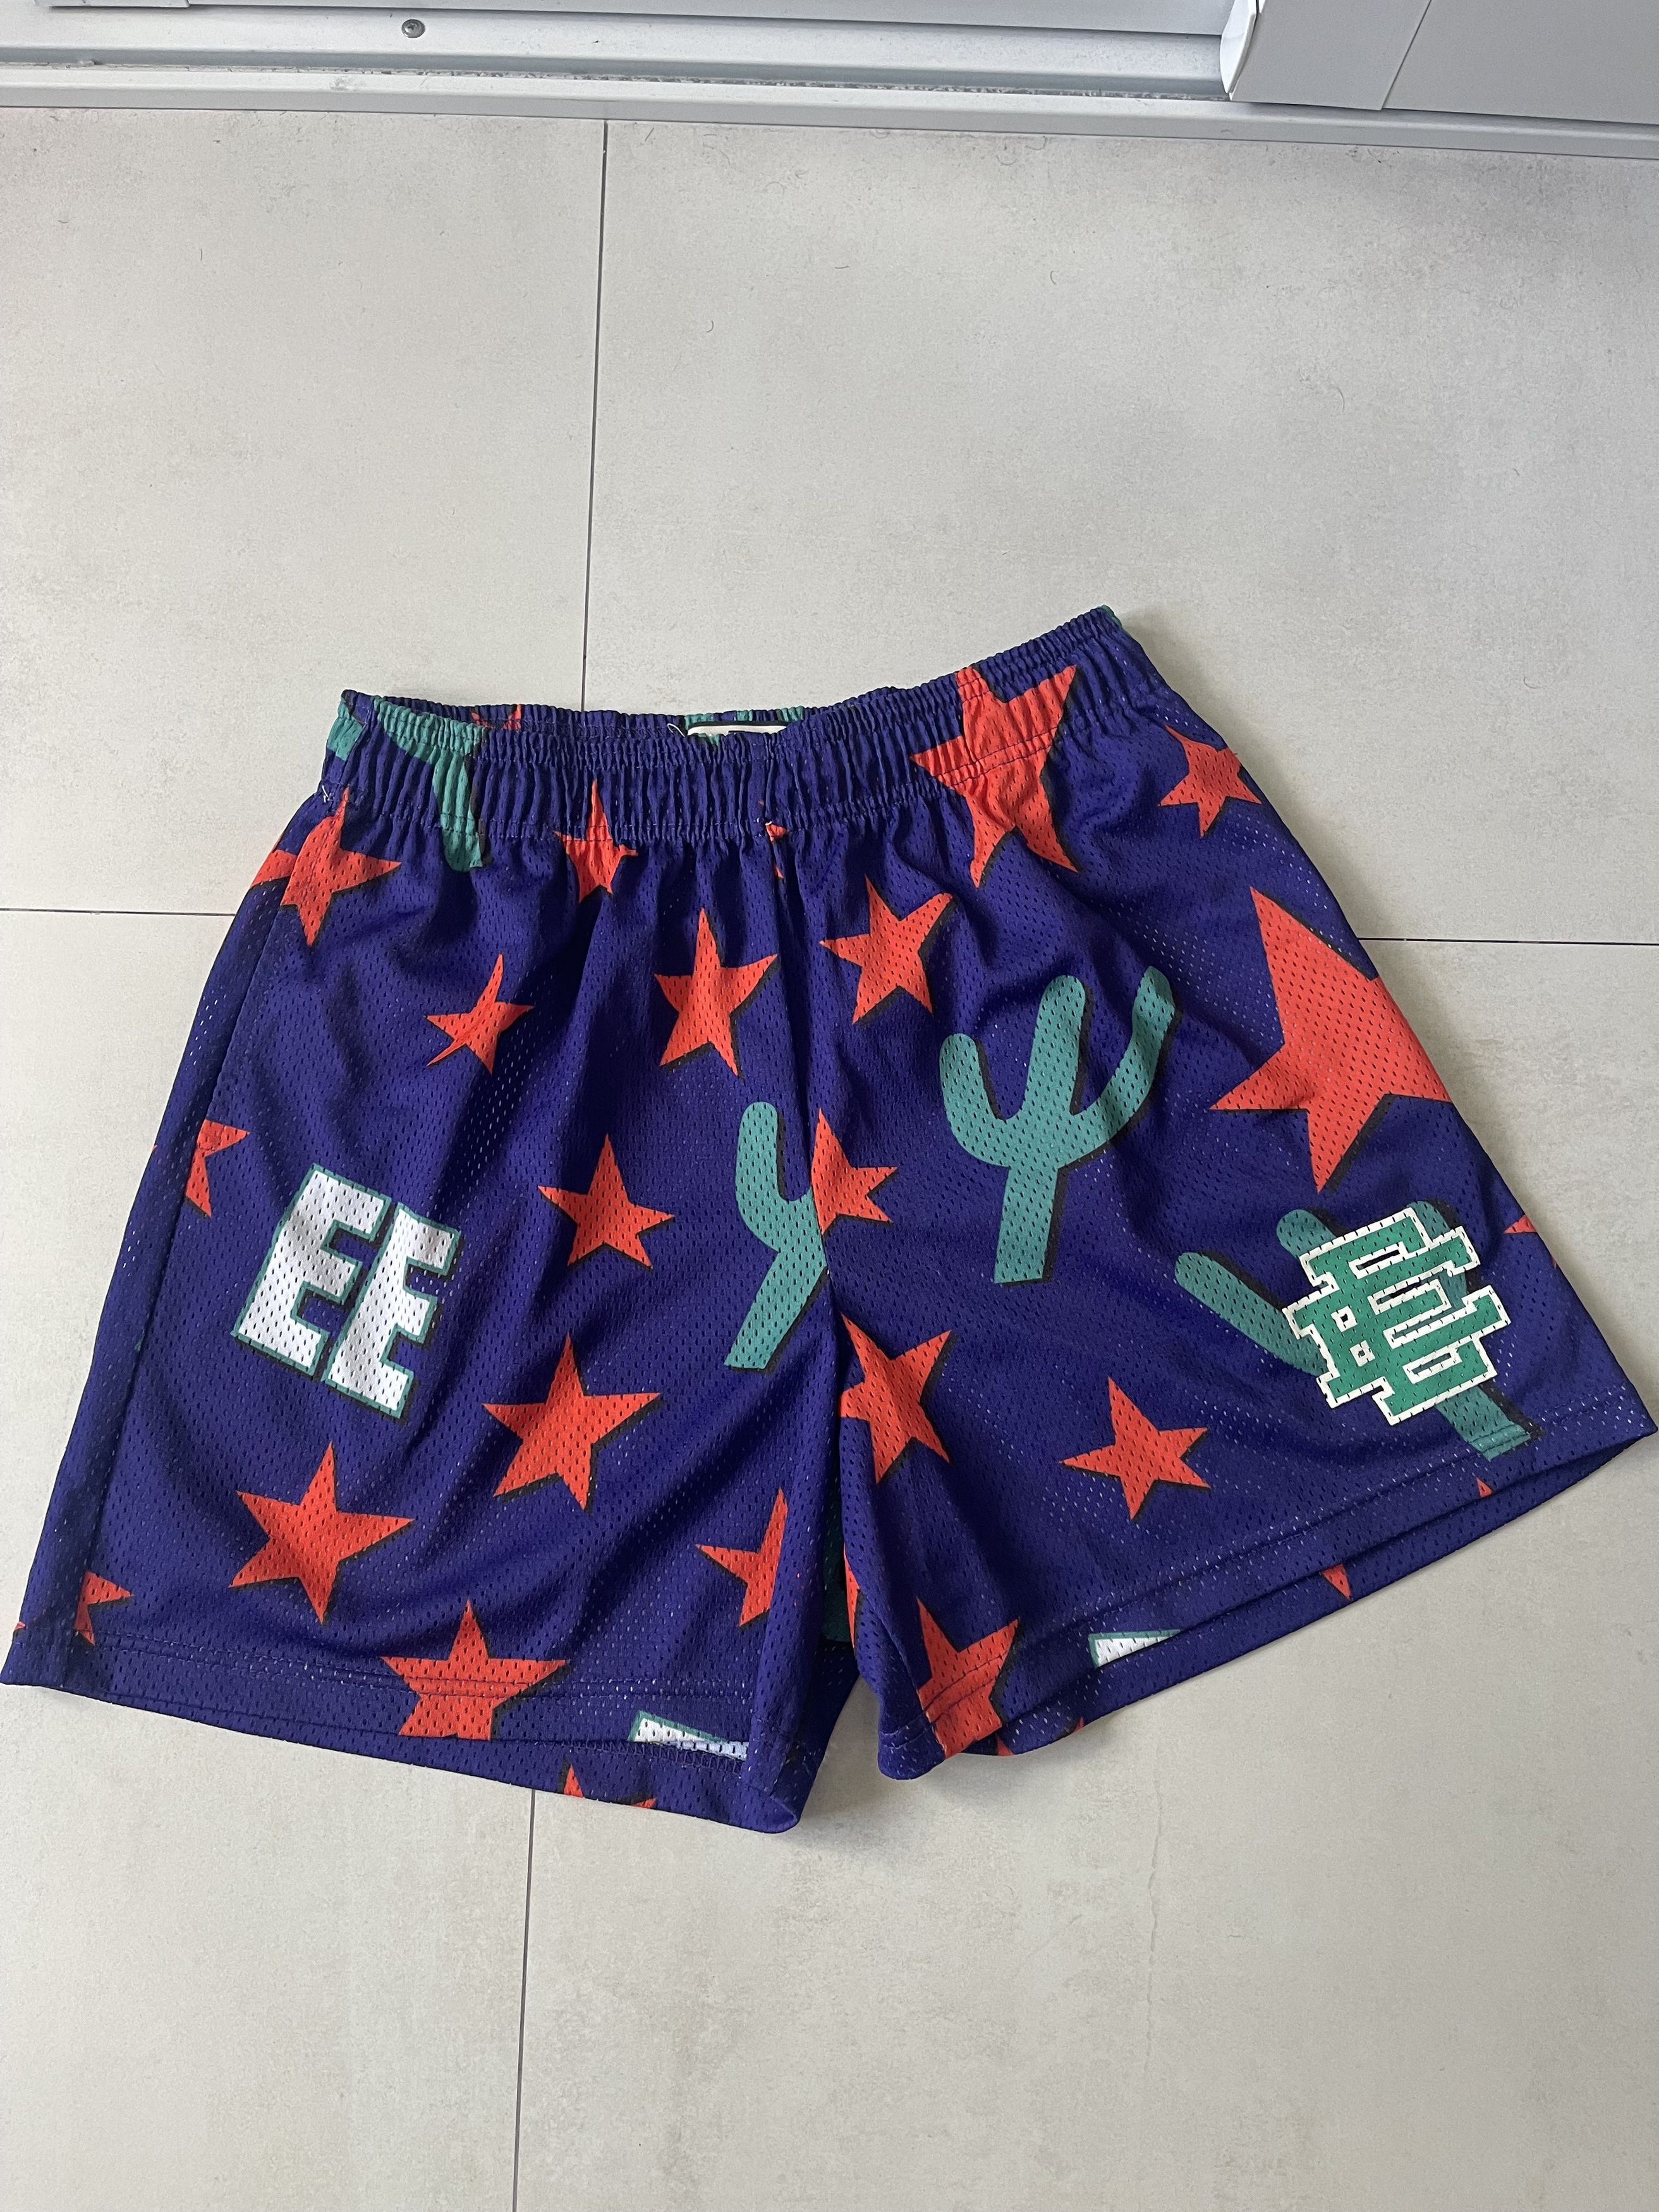 Eric Emanuel Eric Emanuel Retro All Star Game Shorts XL | Grailed